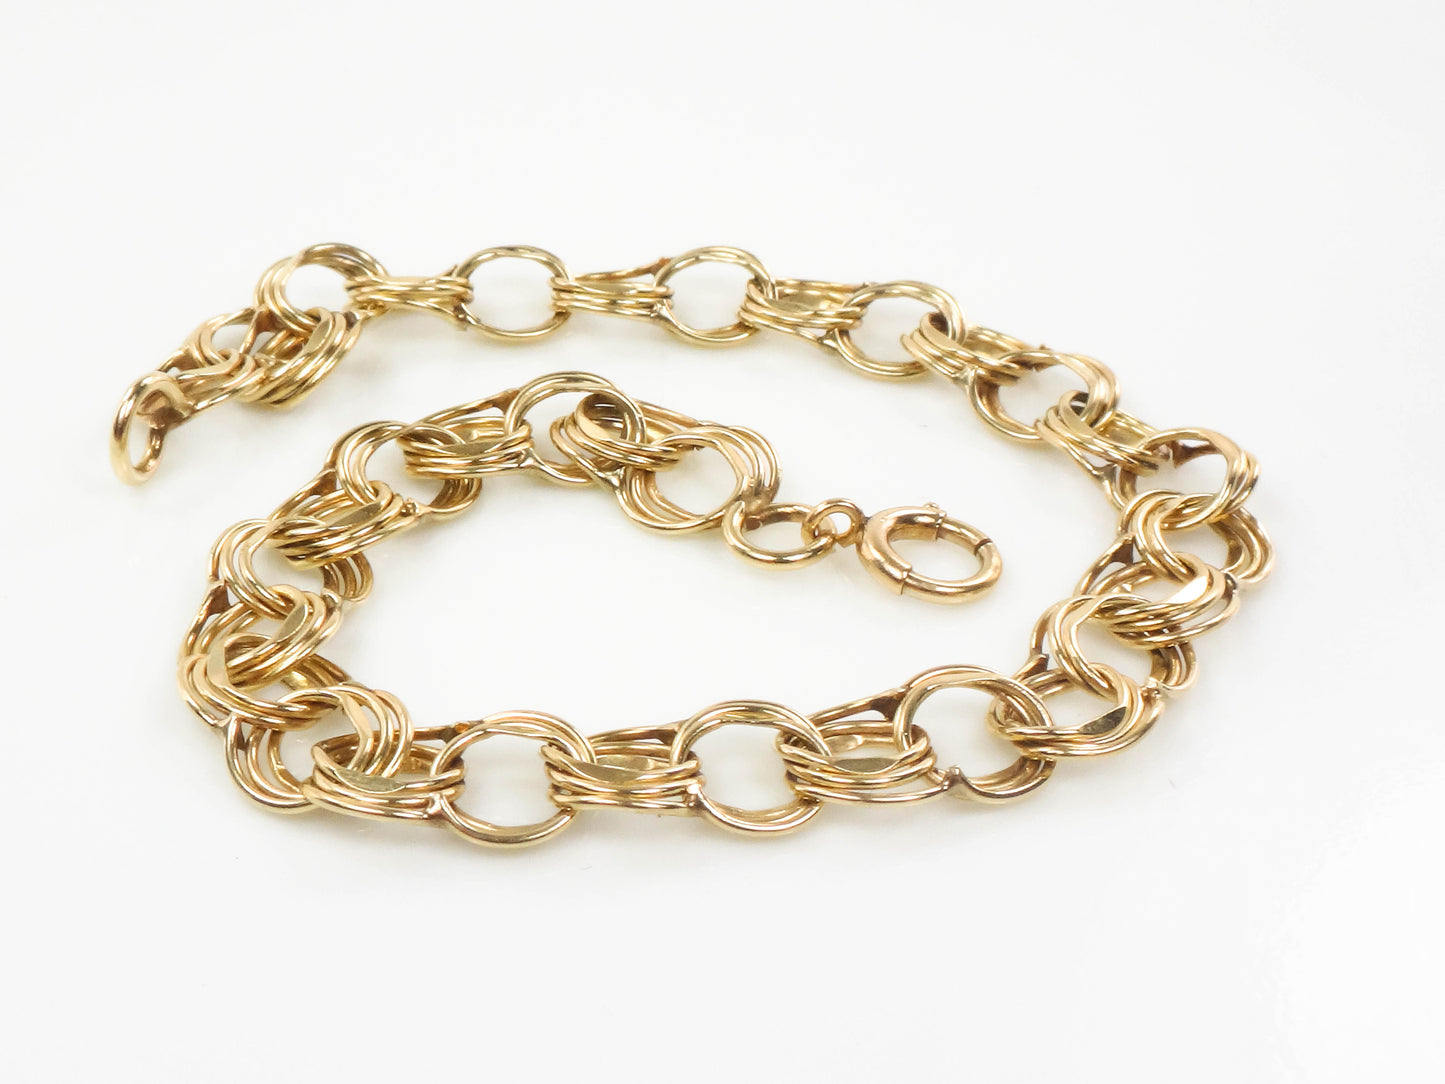 Vintage Solid 14k Yellow Gold Triple Round Link Charm Bracelet 7.25"